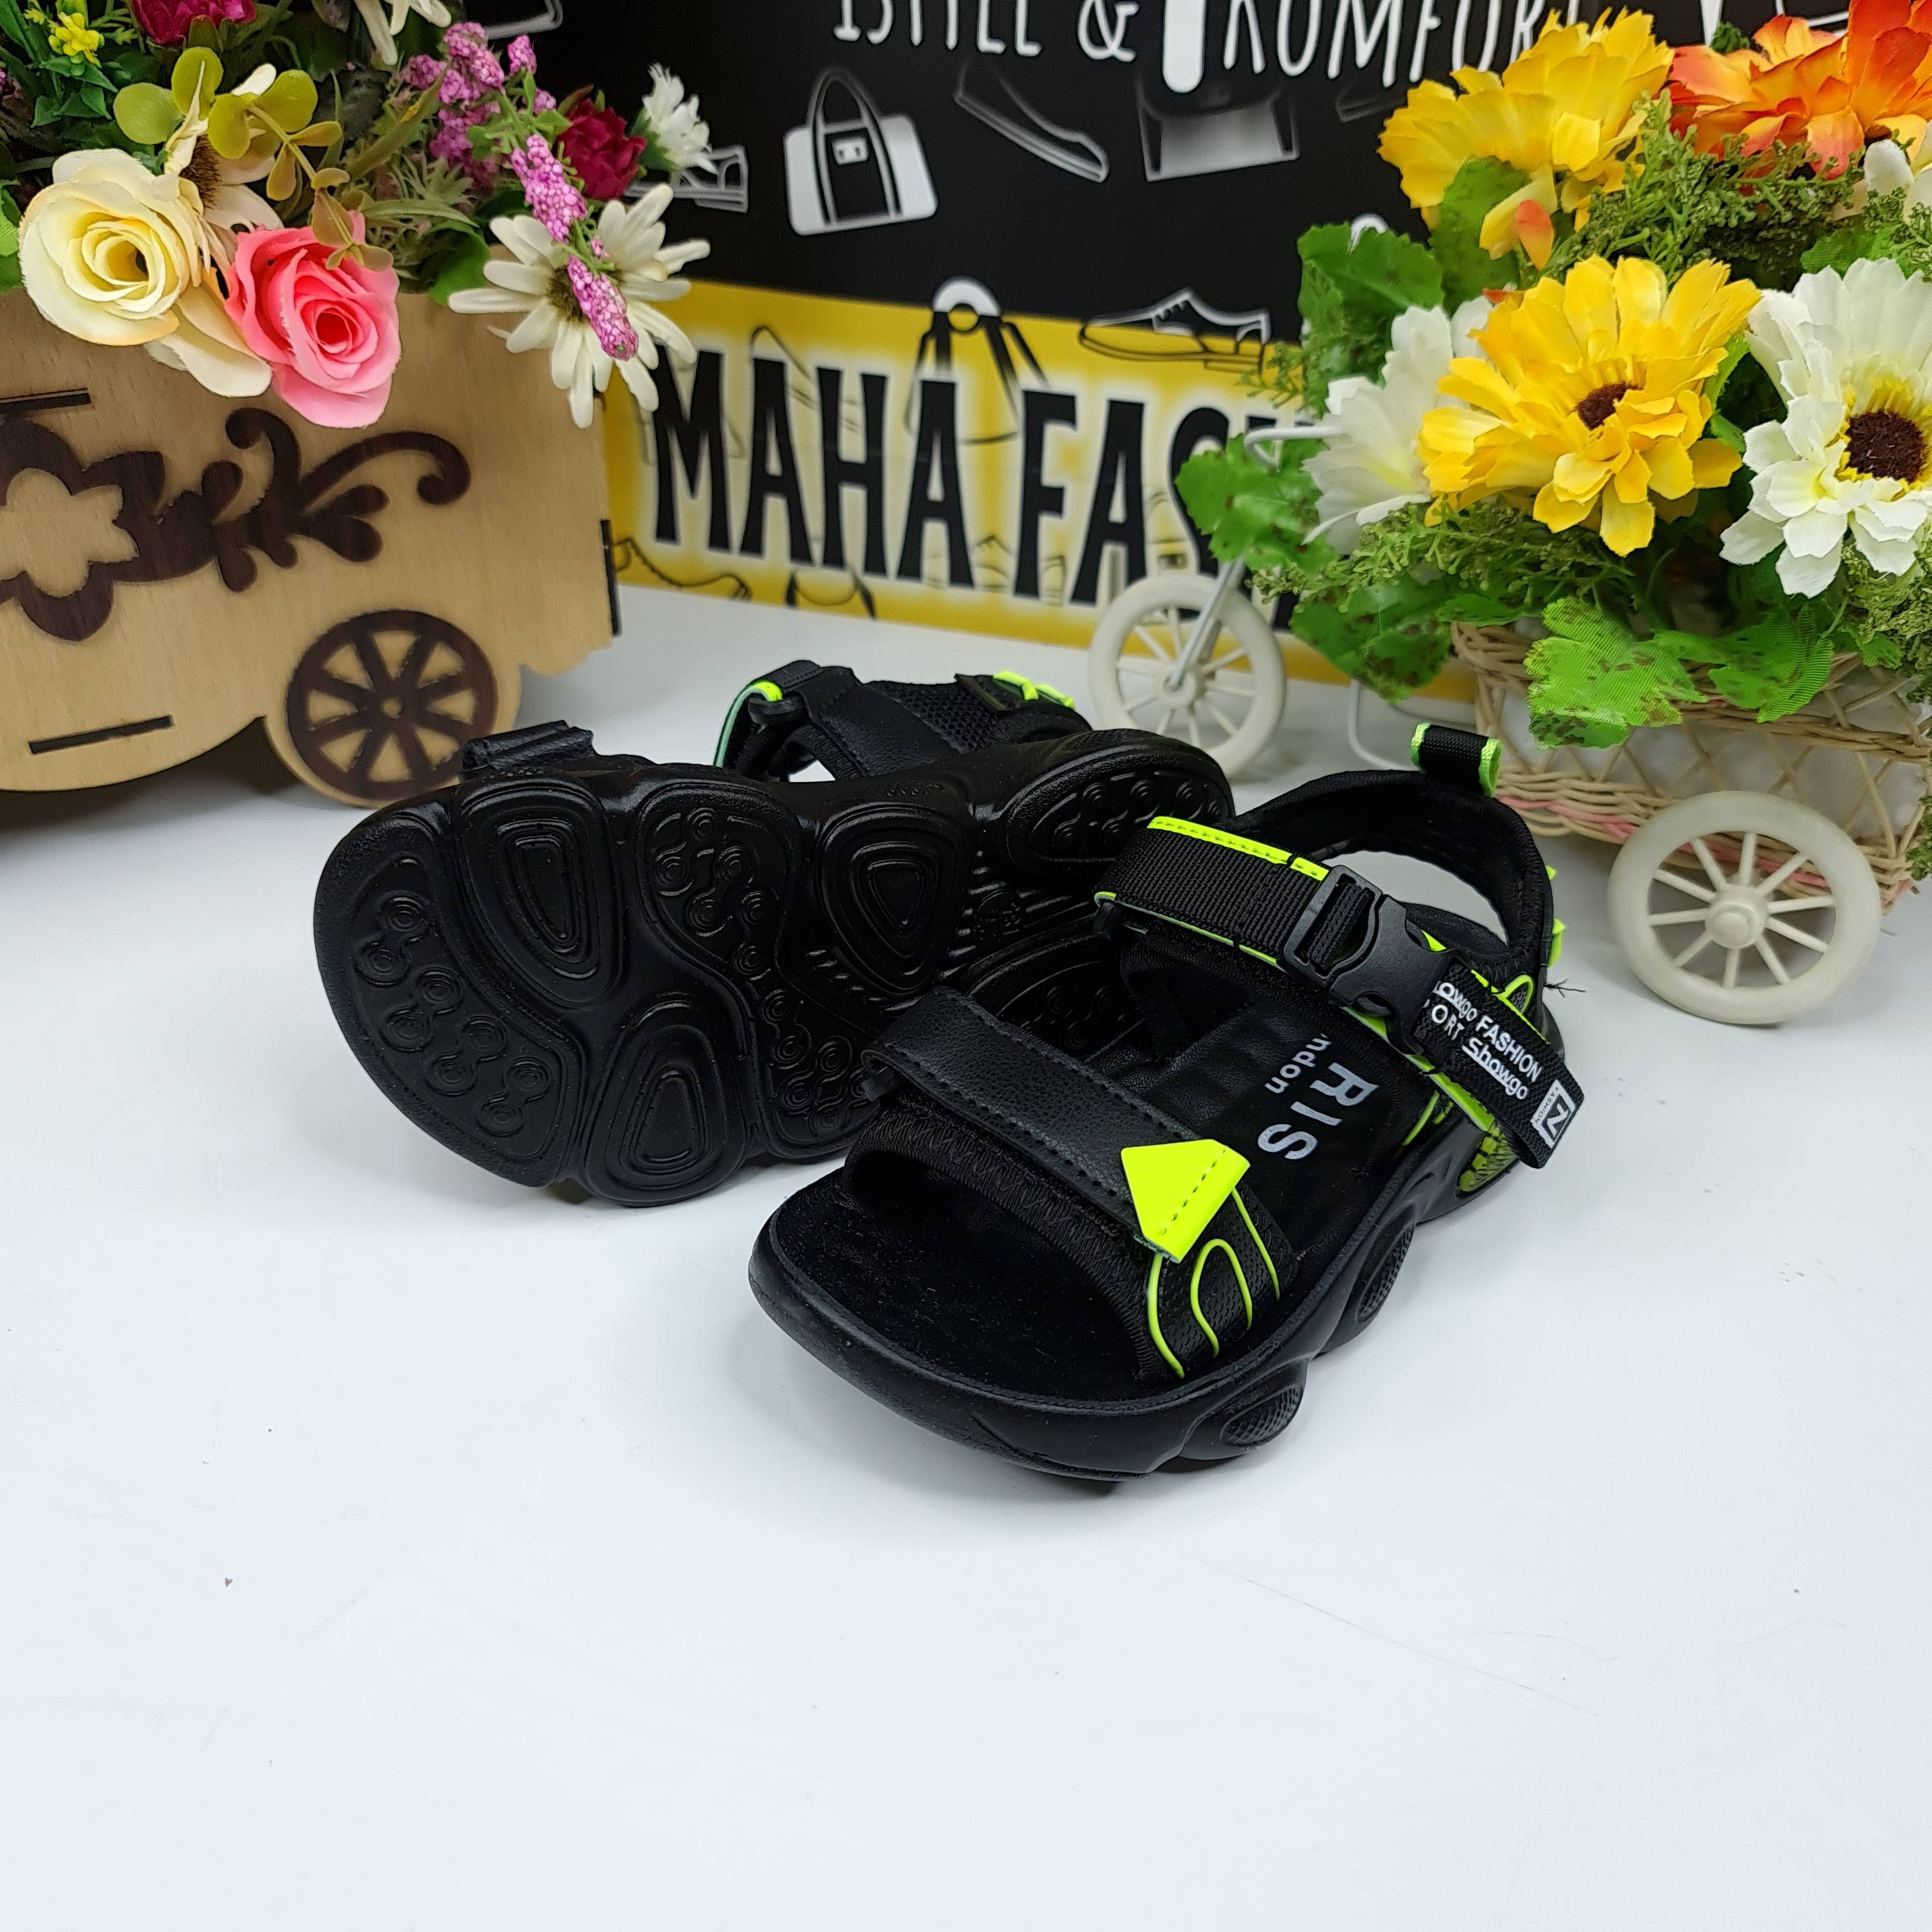 Green Kids Sandals - Maha fashions -  